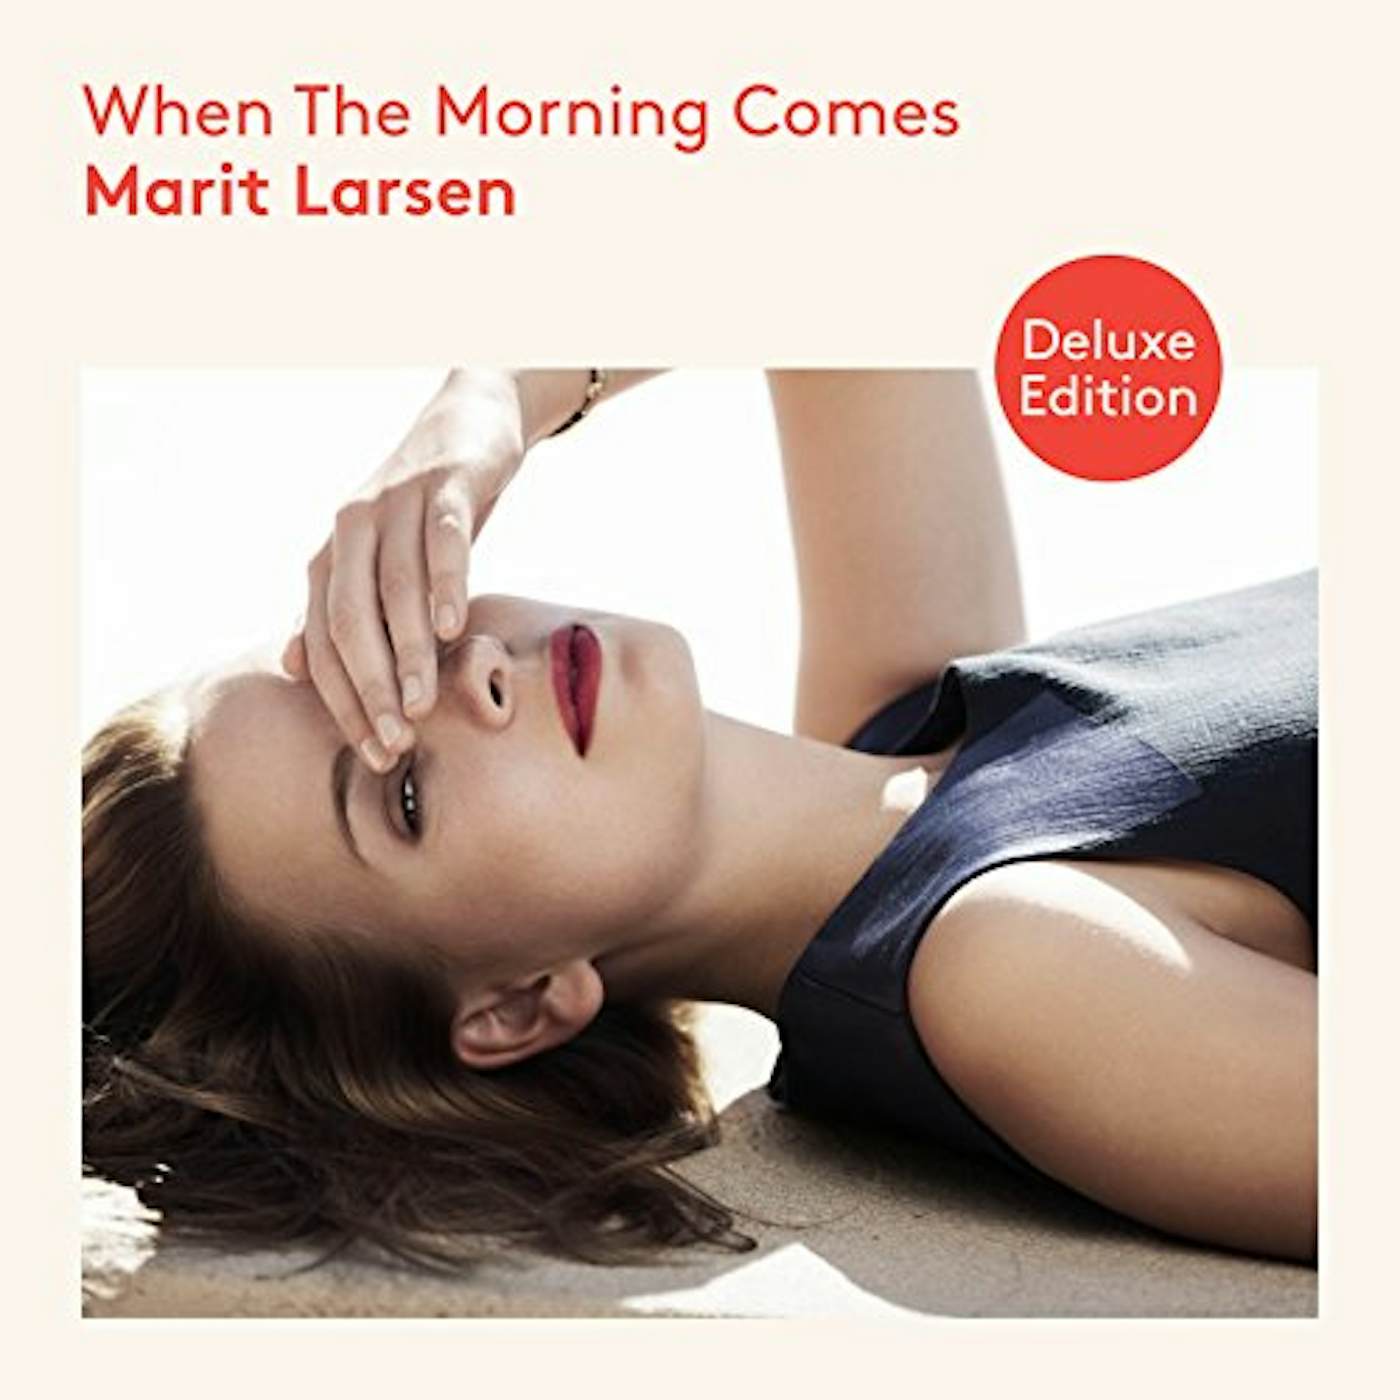 Marit Larsen WHEN THE MORNING COMES CD